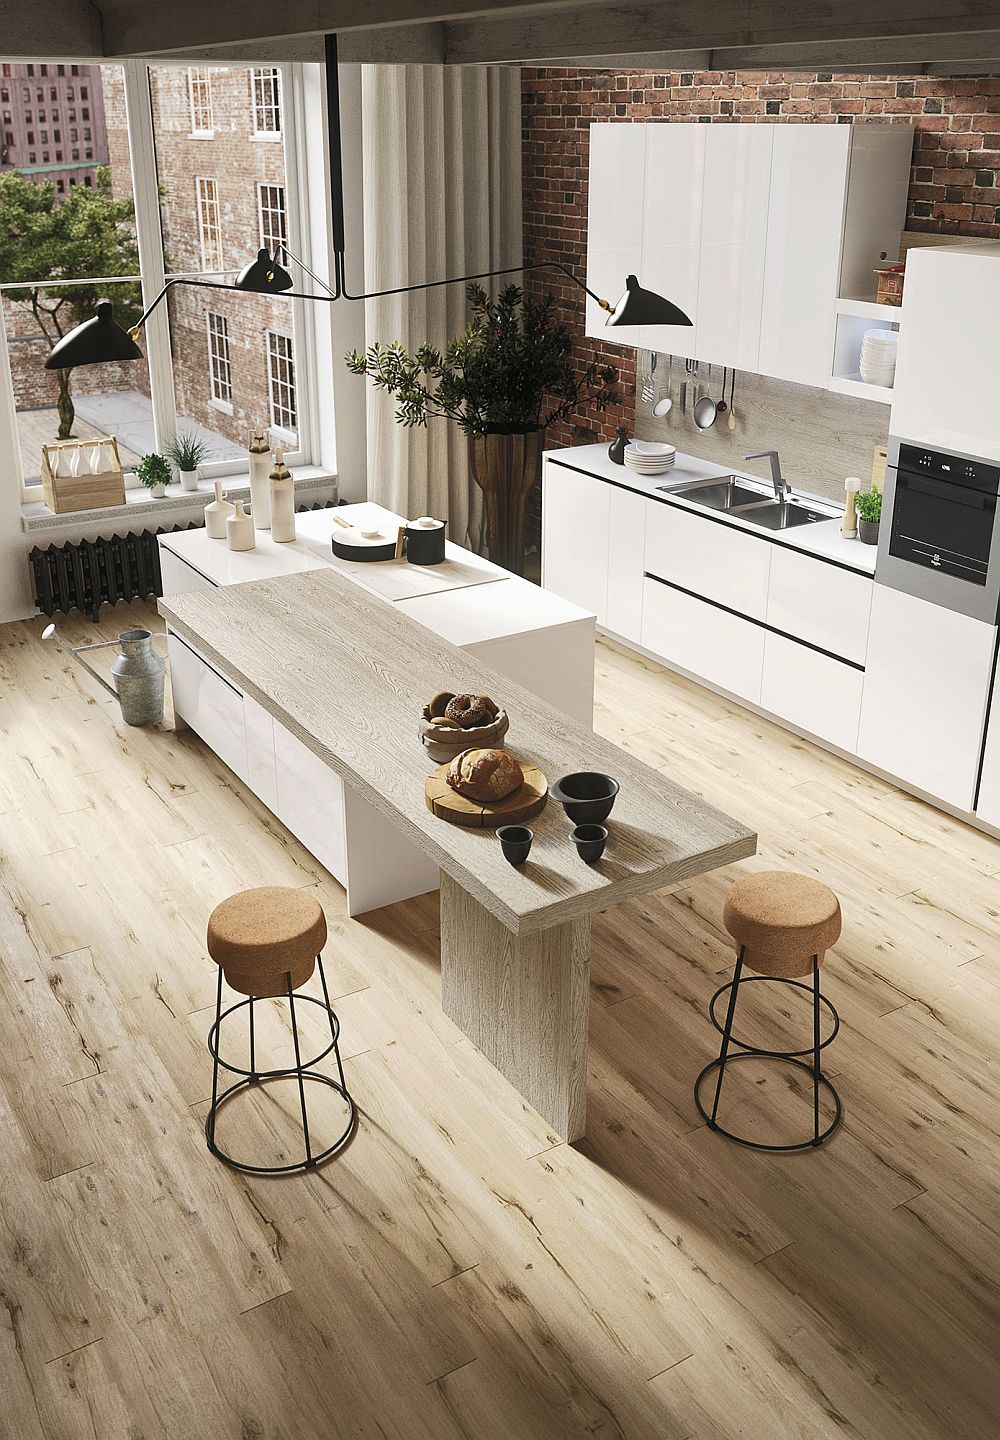 Beautiful, minimal kitchen offers design freedom